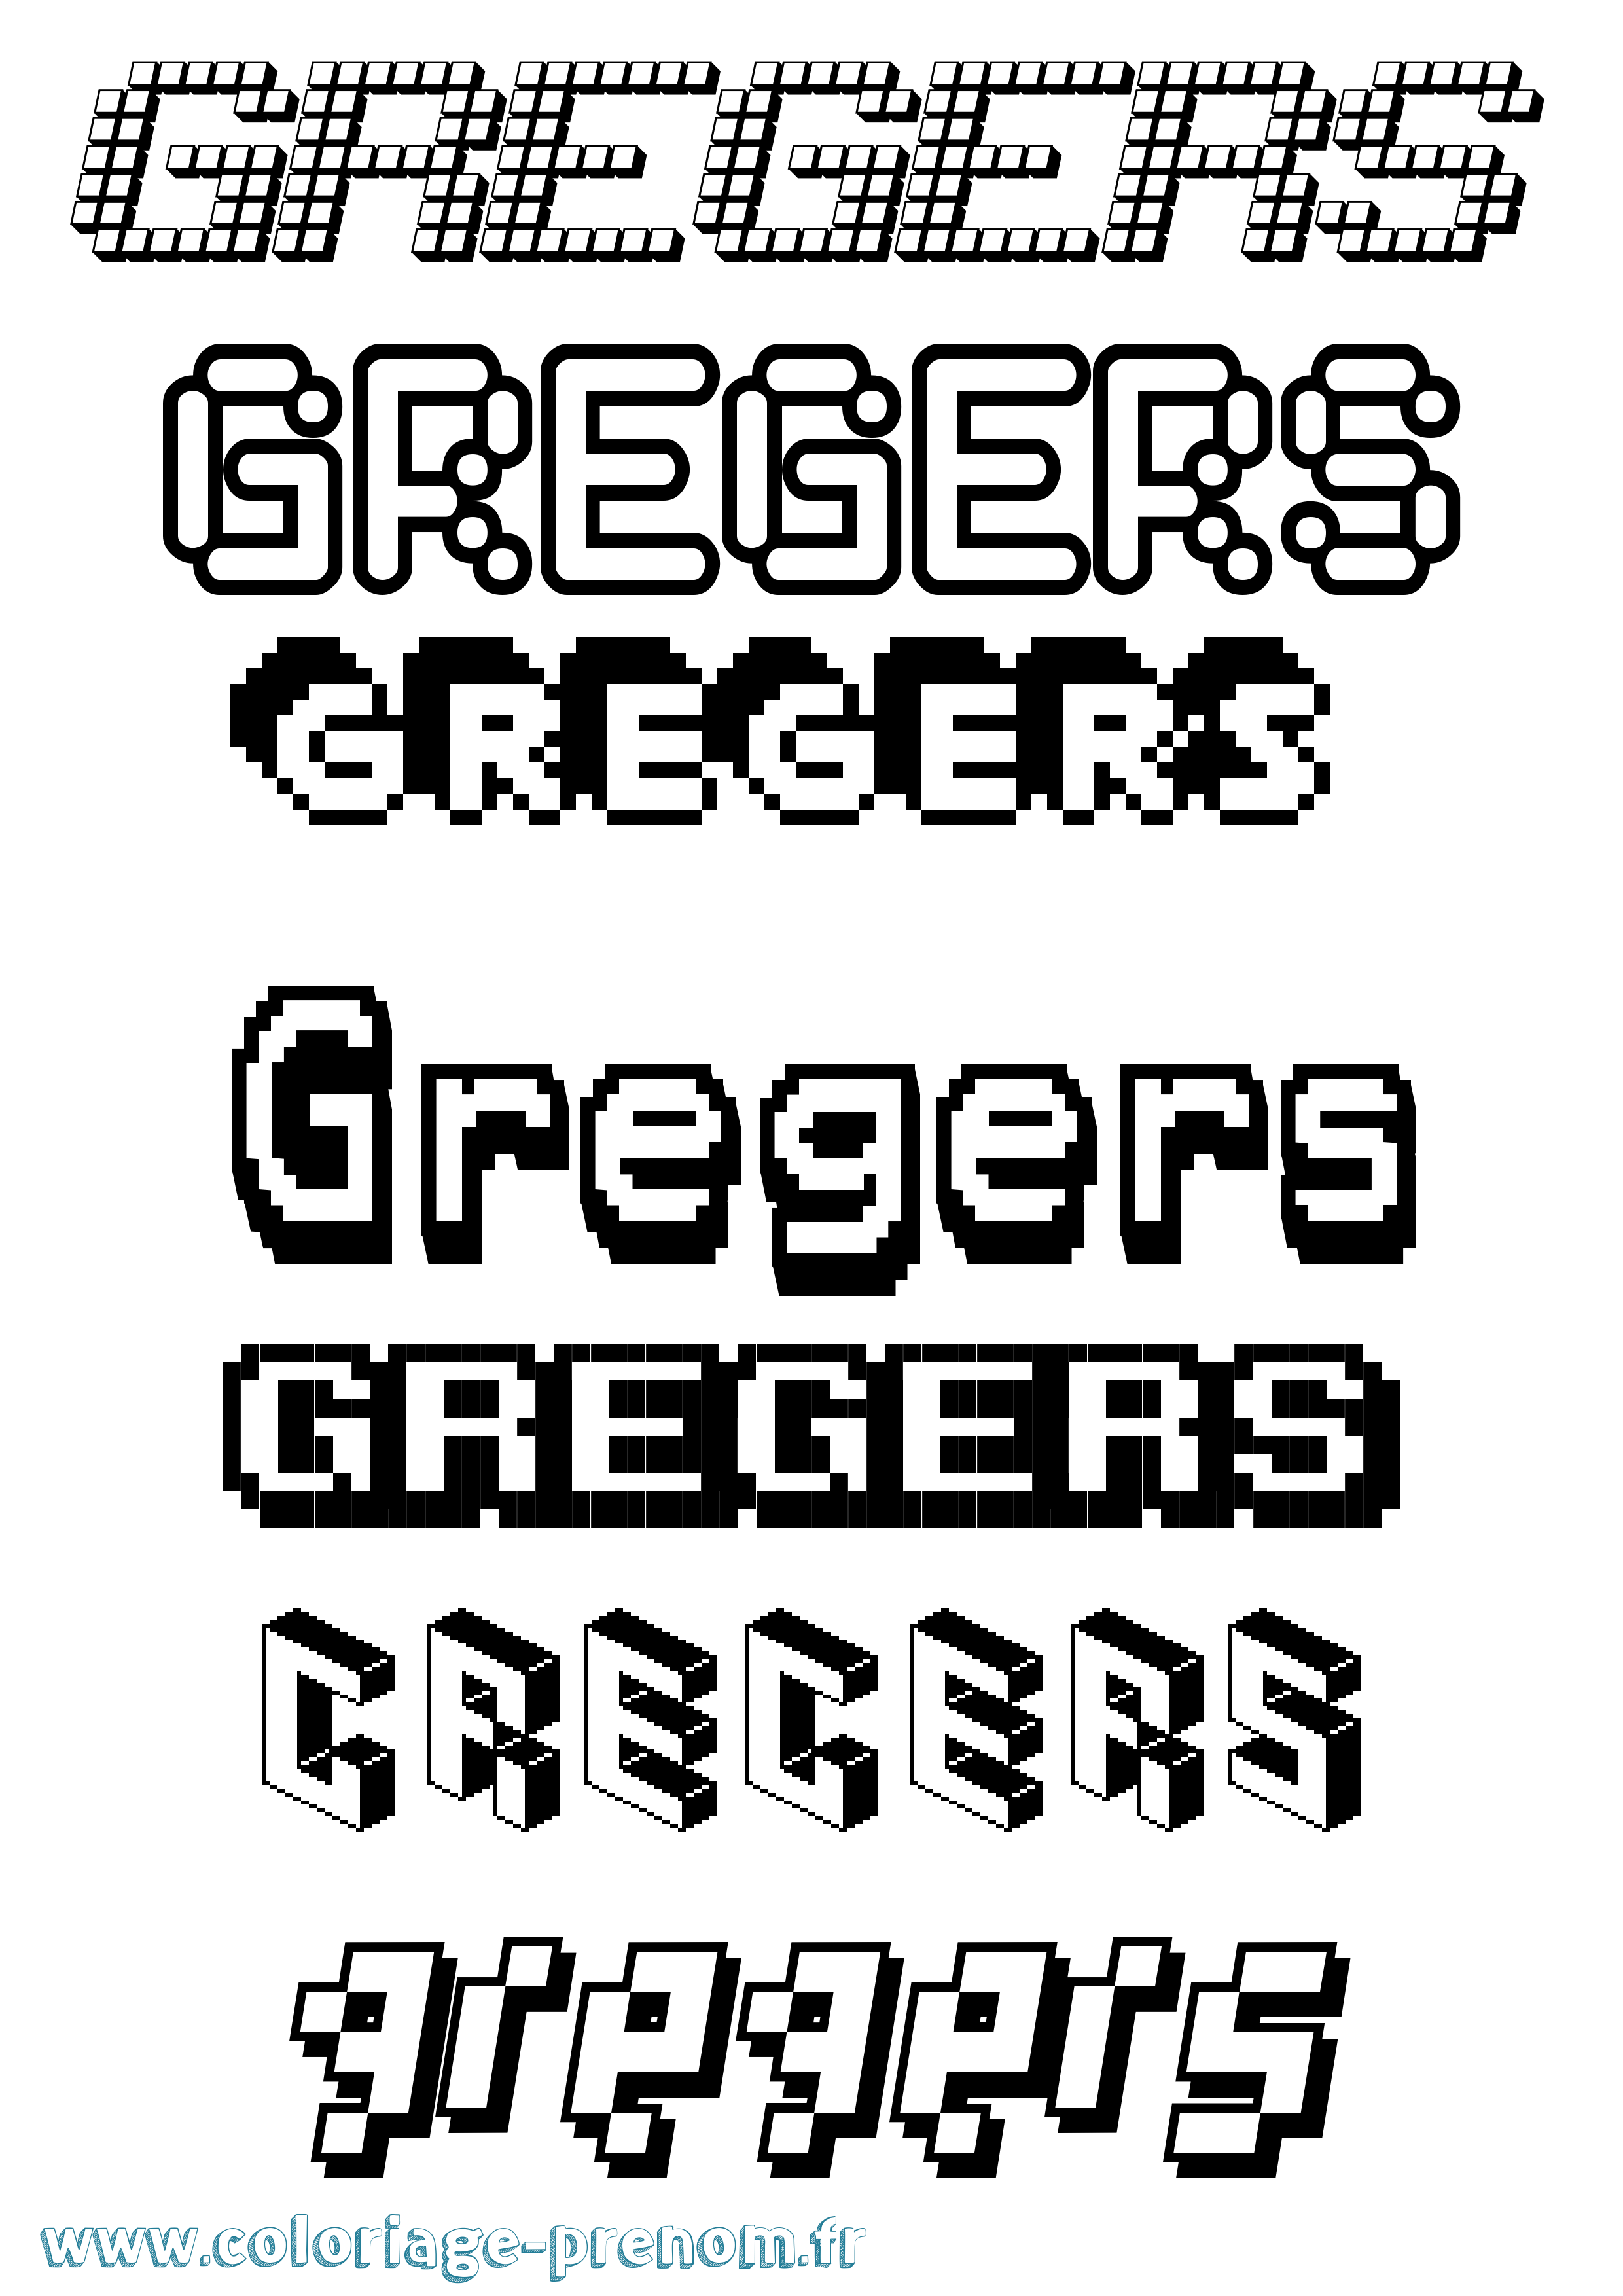 Coloriage prénom Gregers Pixel